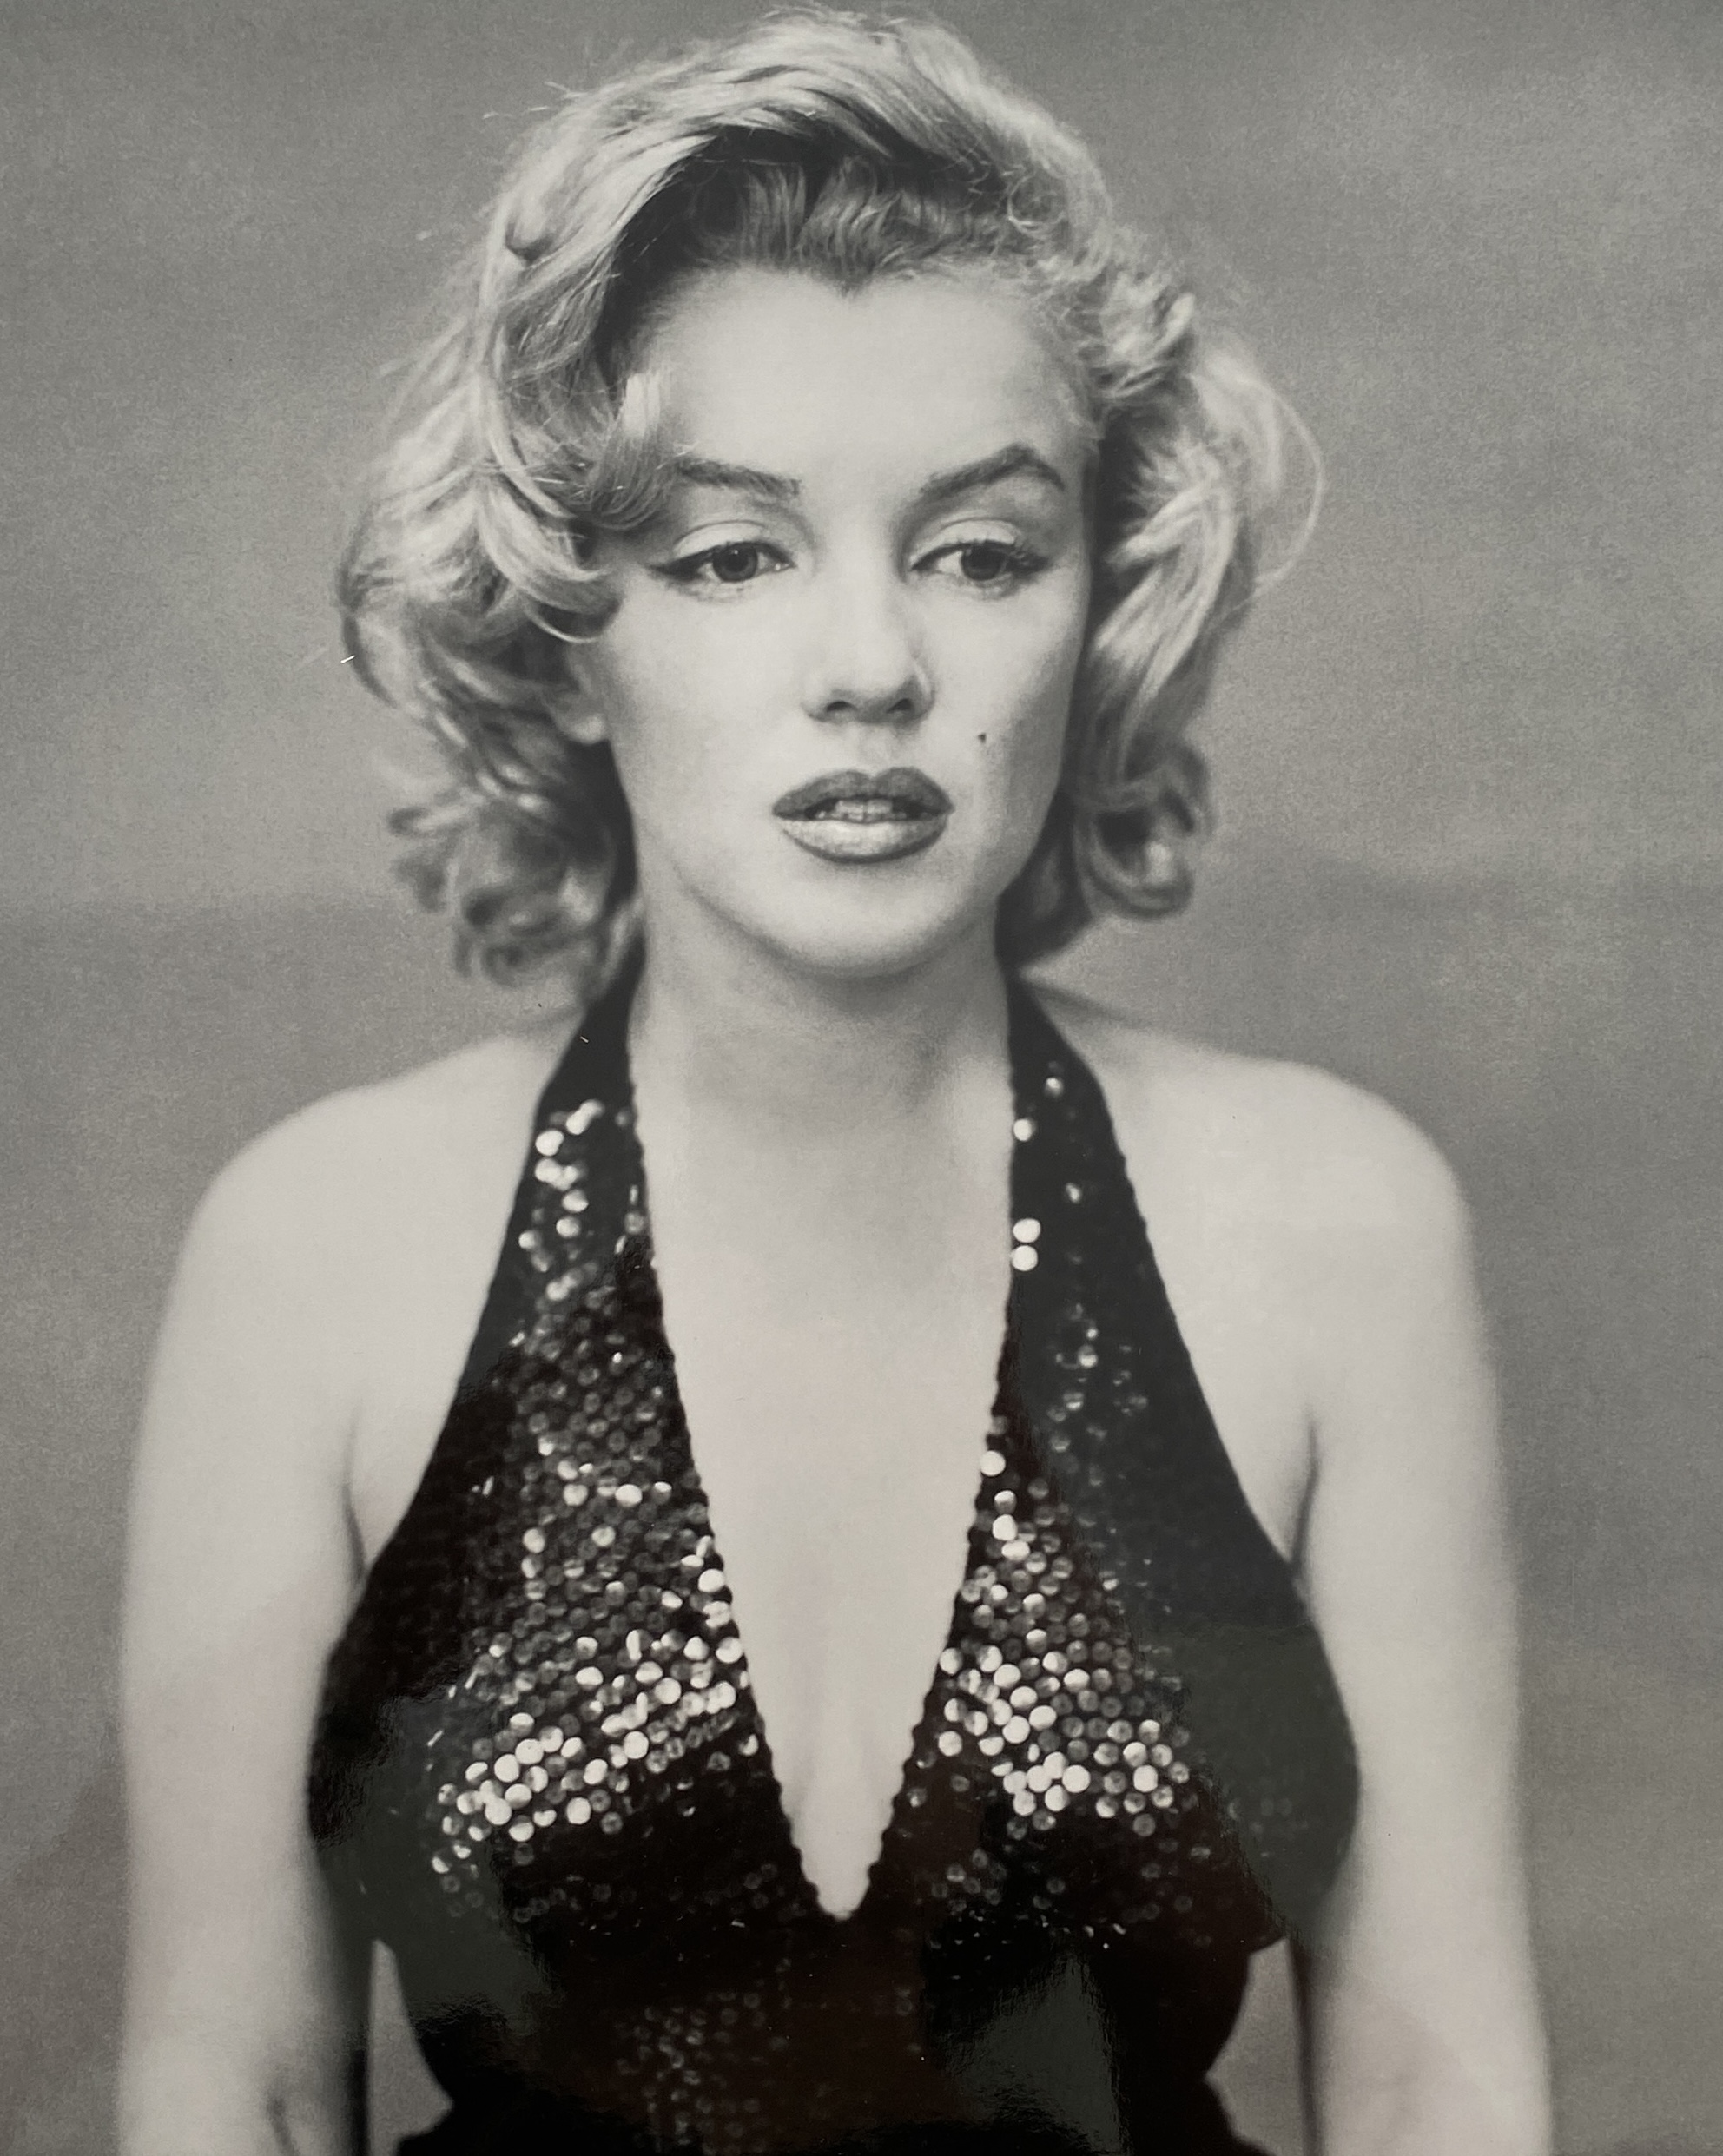 Richard Avedon - Marilyn Monroe, 1964